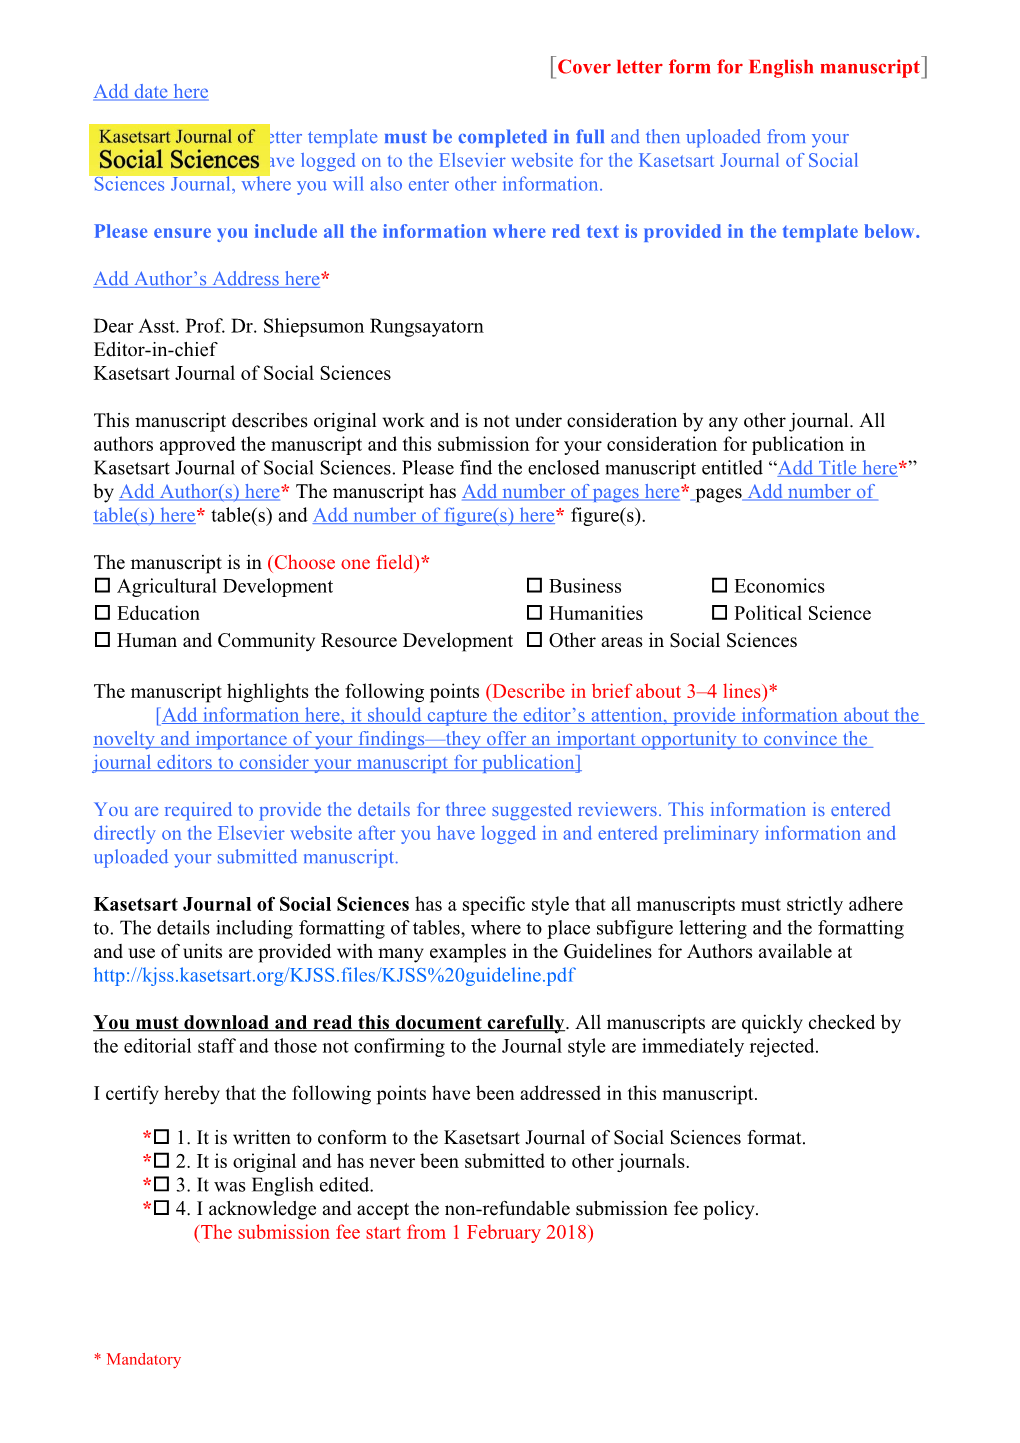 Cover Letter Form for English Manuscript